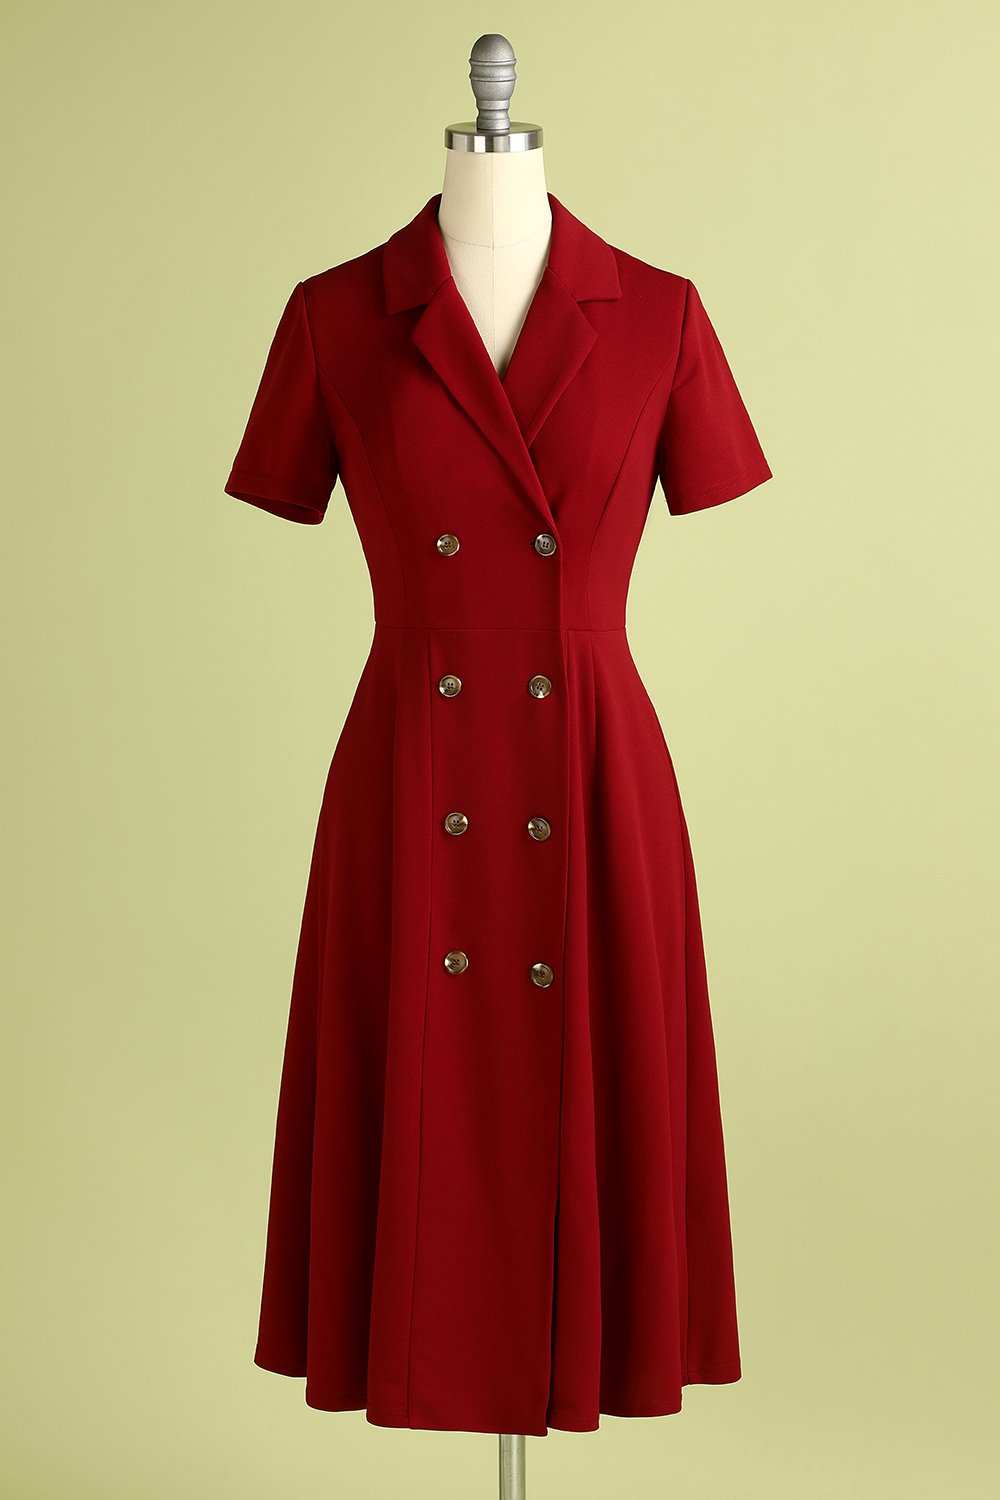 Burgundy Vintage Dress